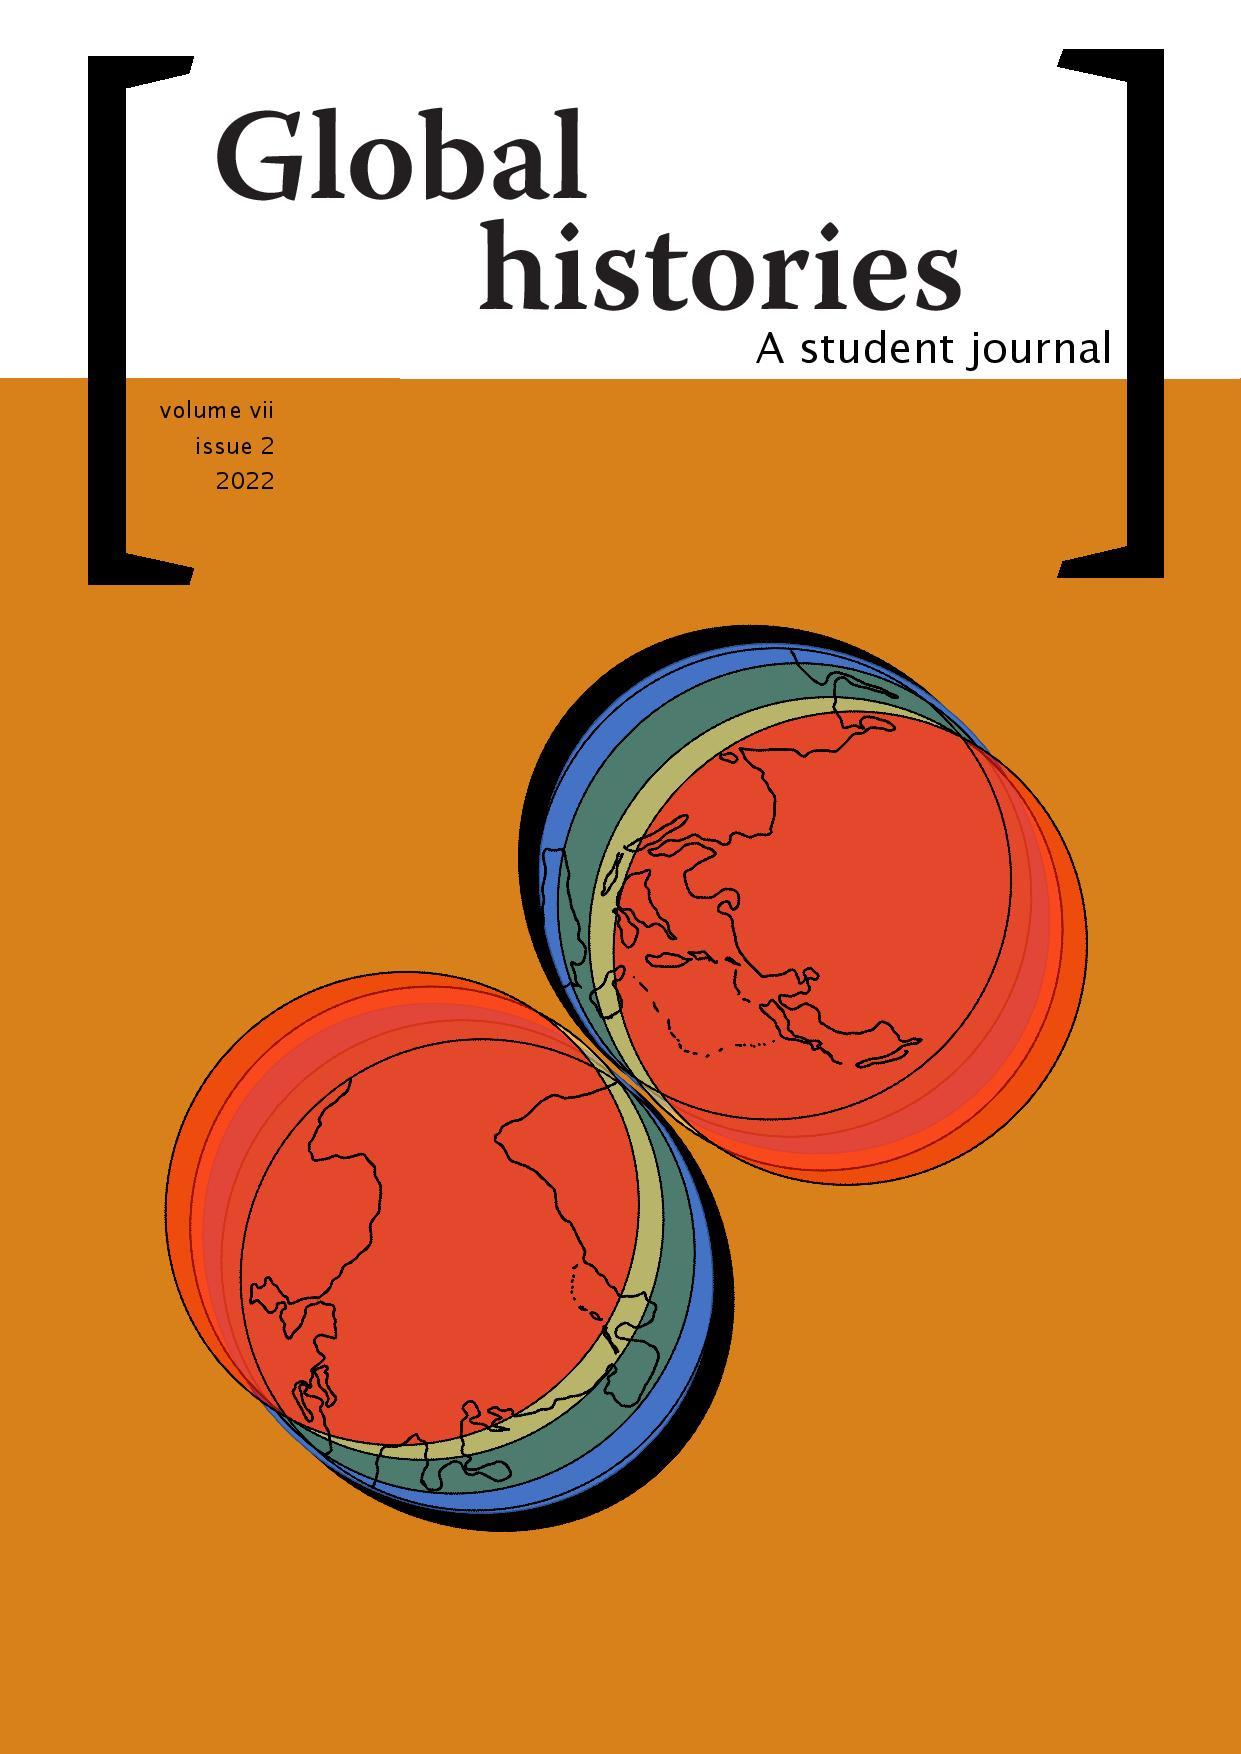 					View Vol. 7 No. 2 (2021): Global histories 7 (2)
				